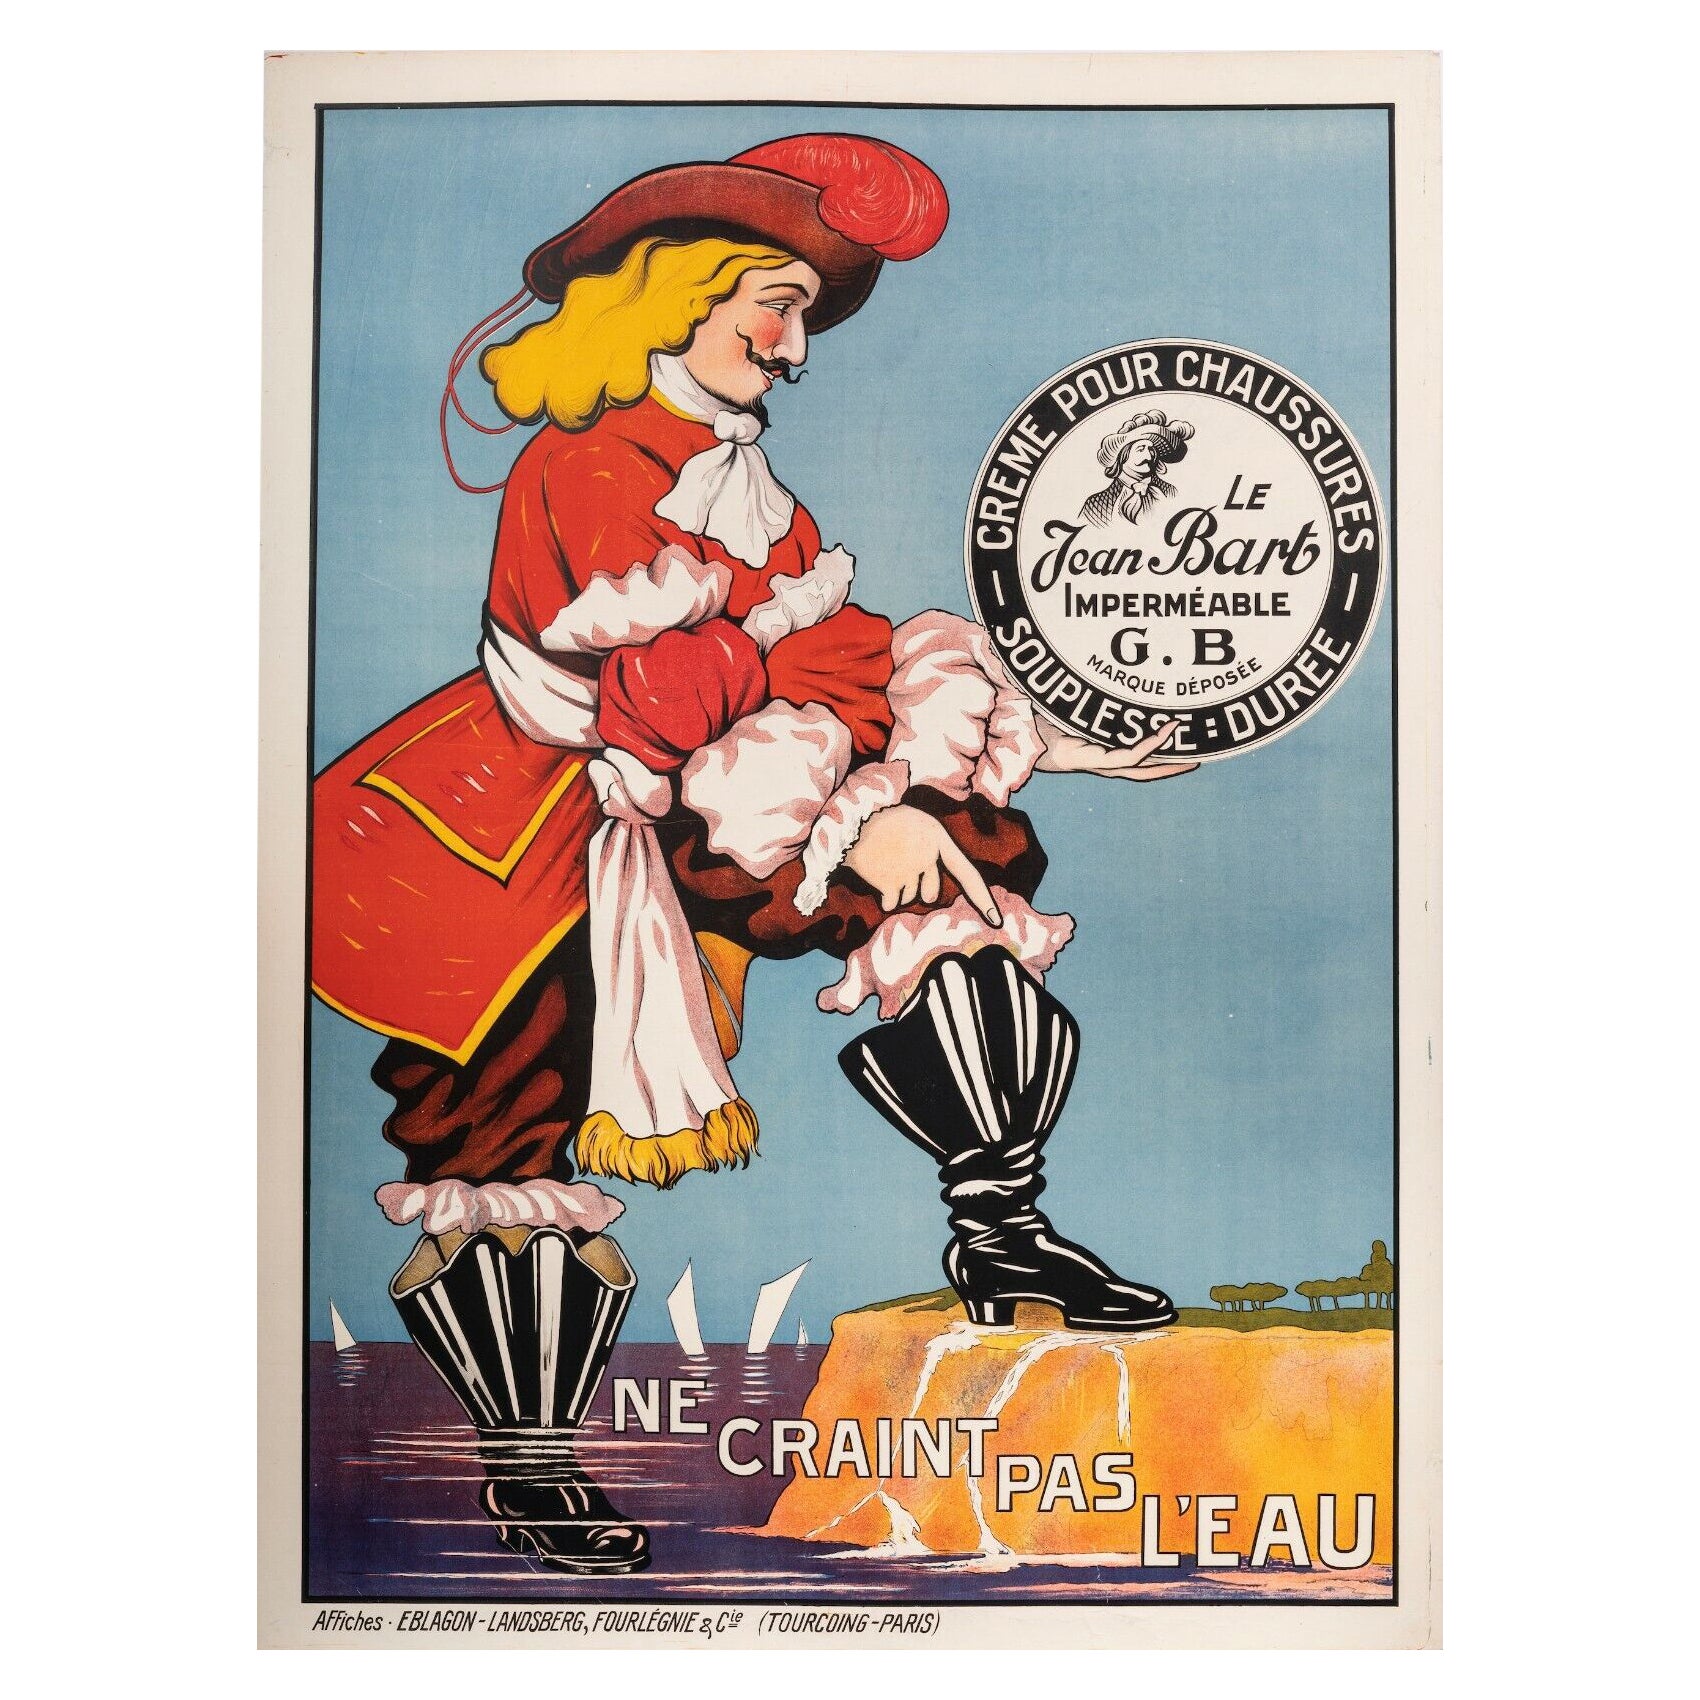 Original Vintage Poster-Jean Bart Shoe Polish-Corsair-Pirate-Boot, c. 1930